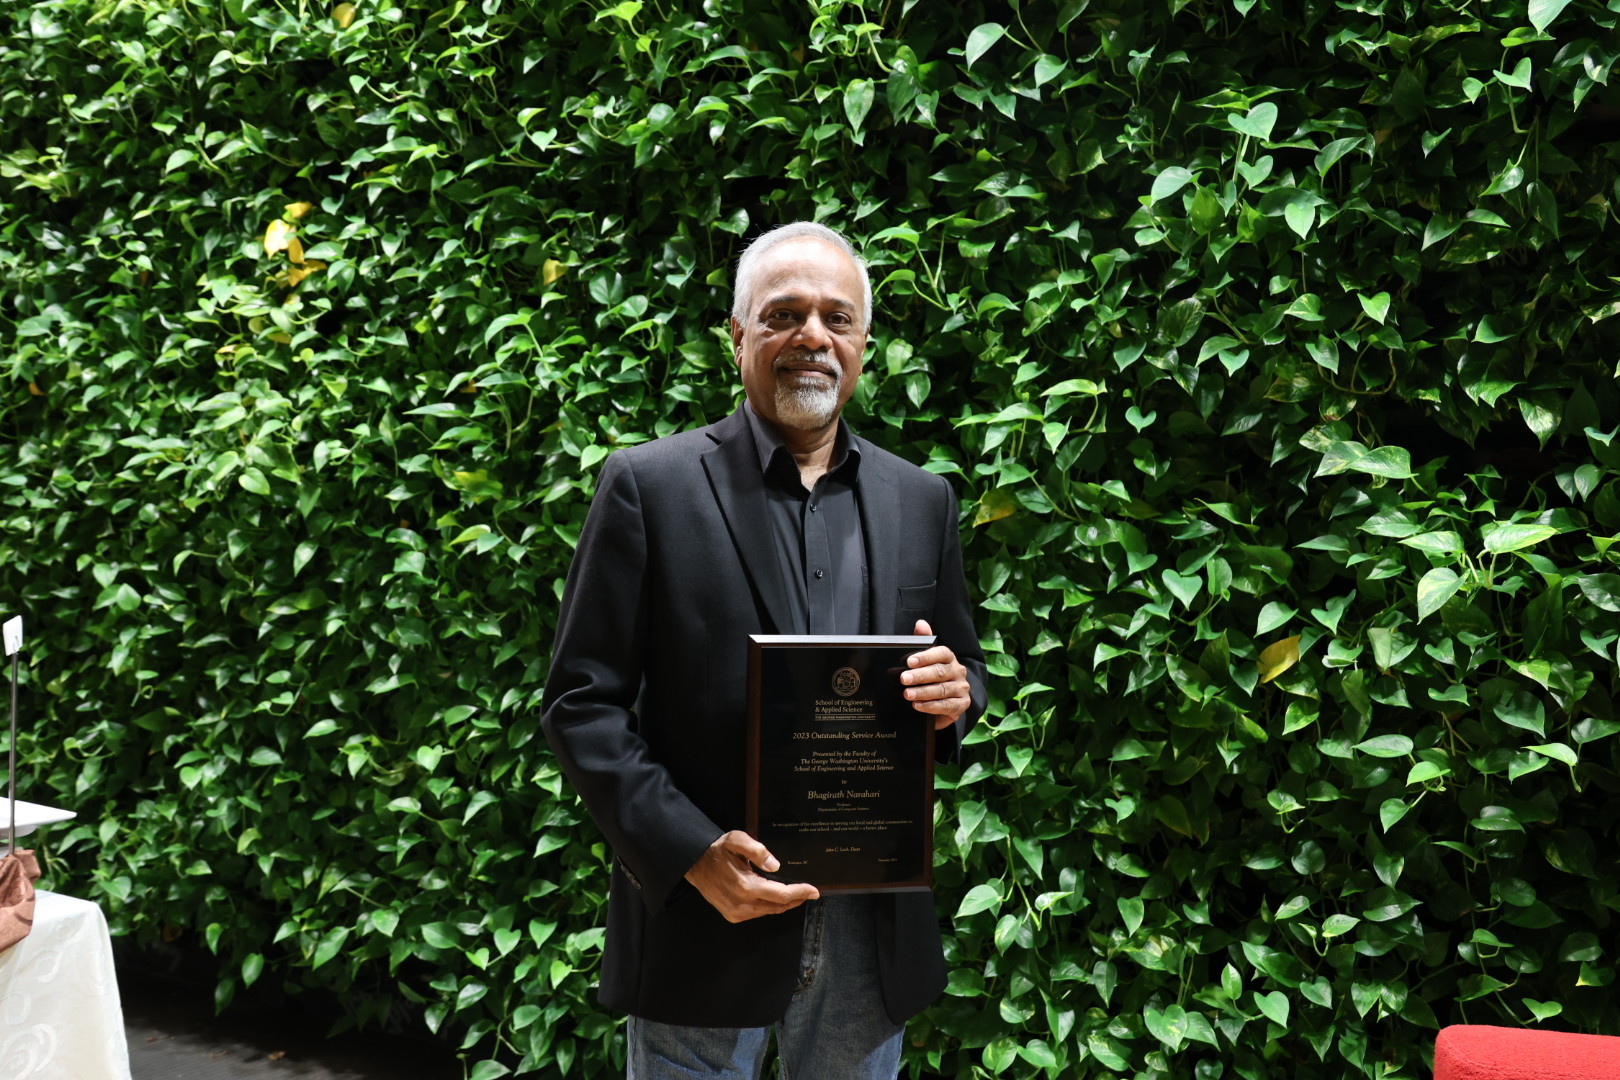 Professor Narahari holding his award plaque